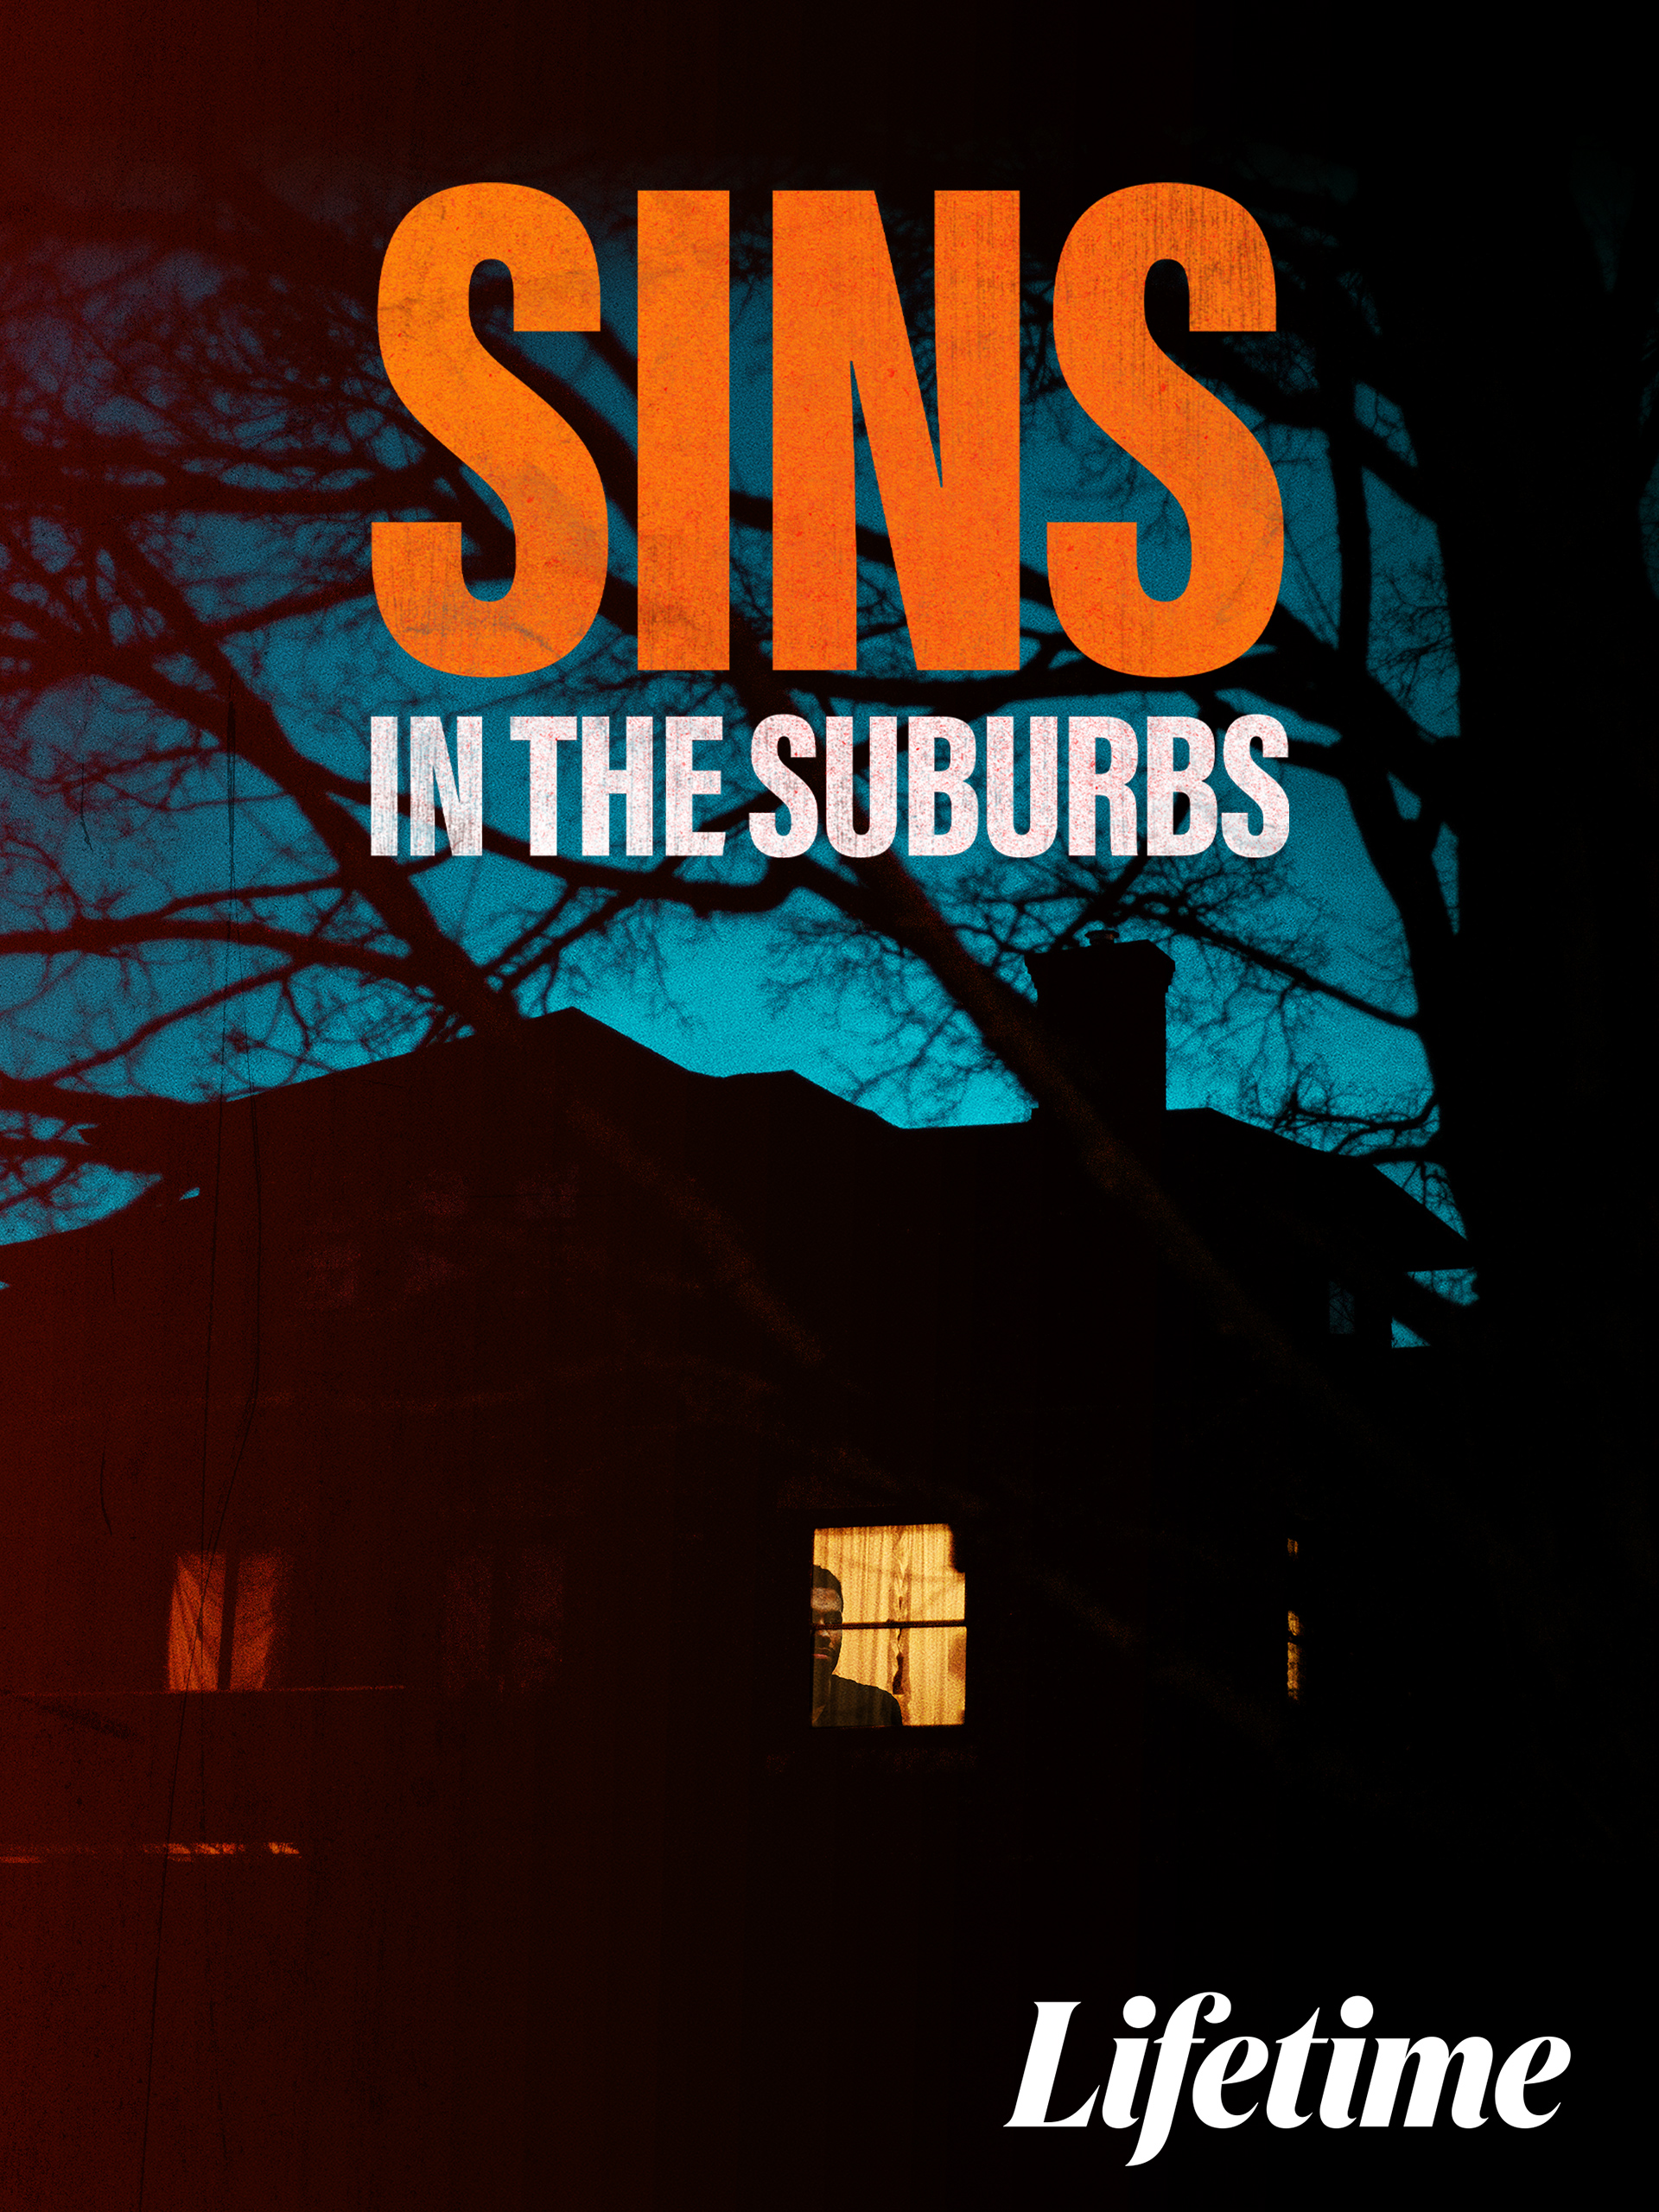 Nonton film Sins in the Suburbs layarkaca21 indoxx1 ganool online streaming terbaru